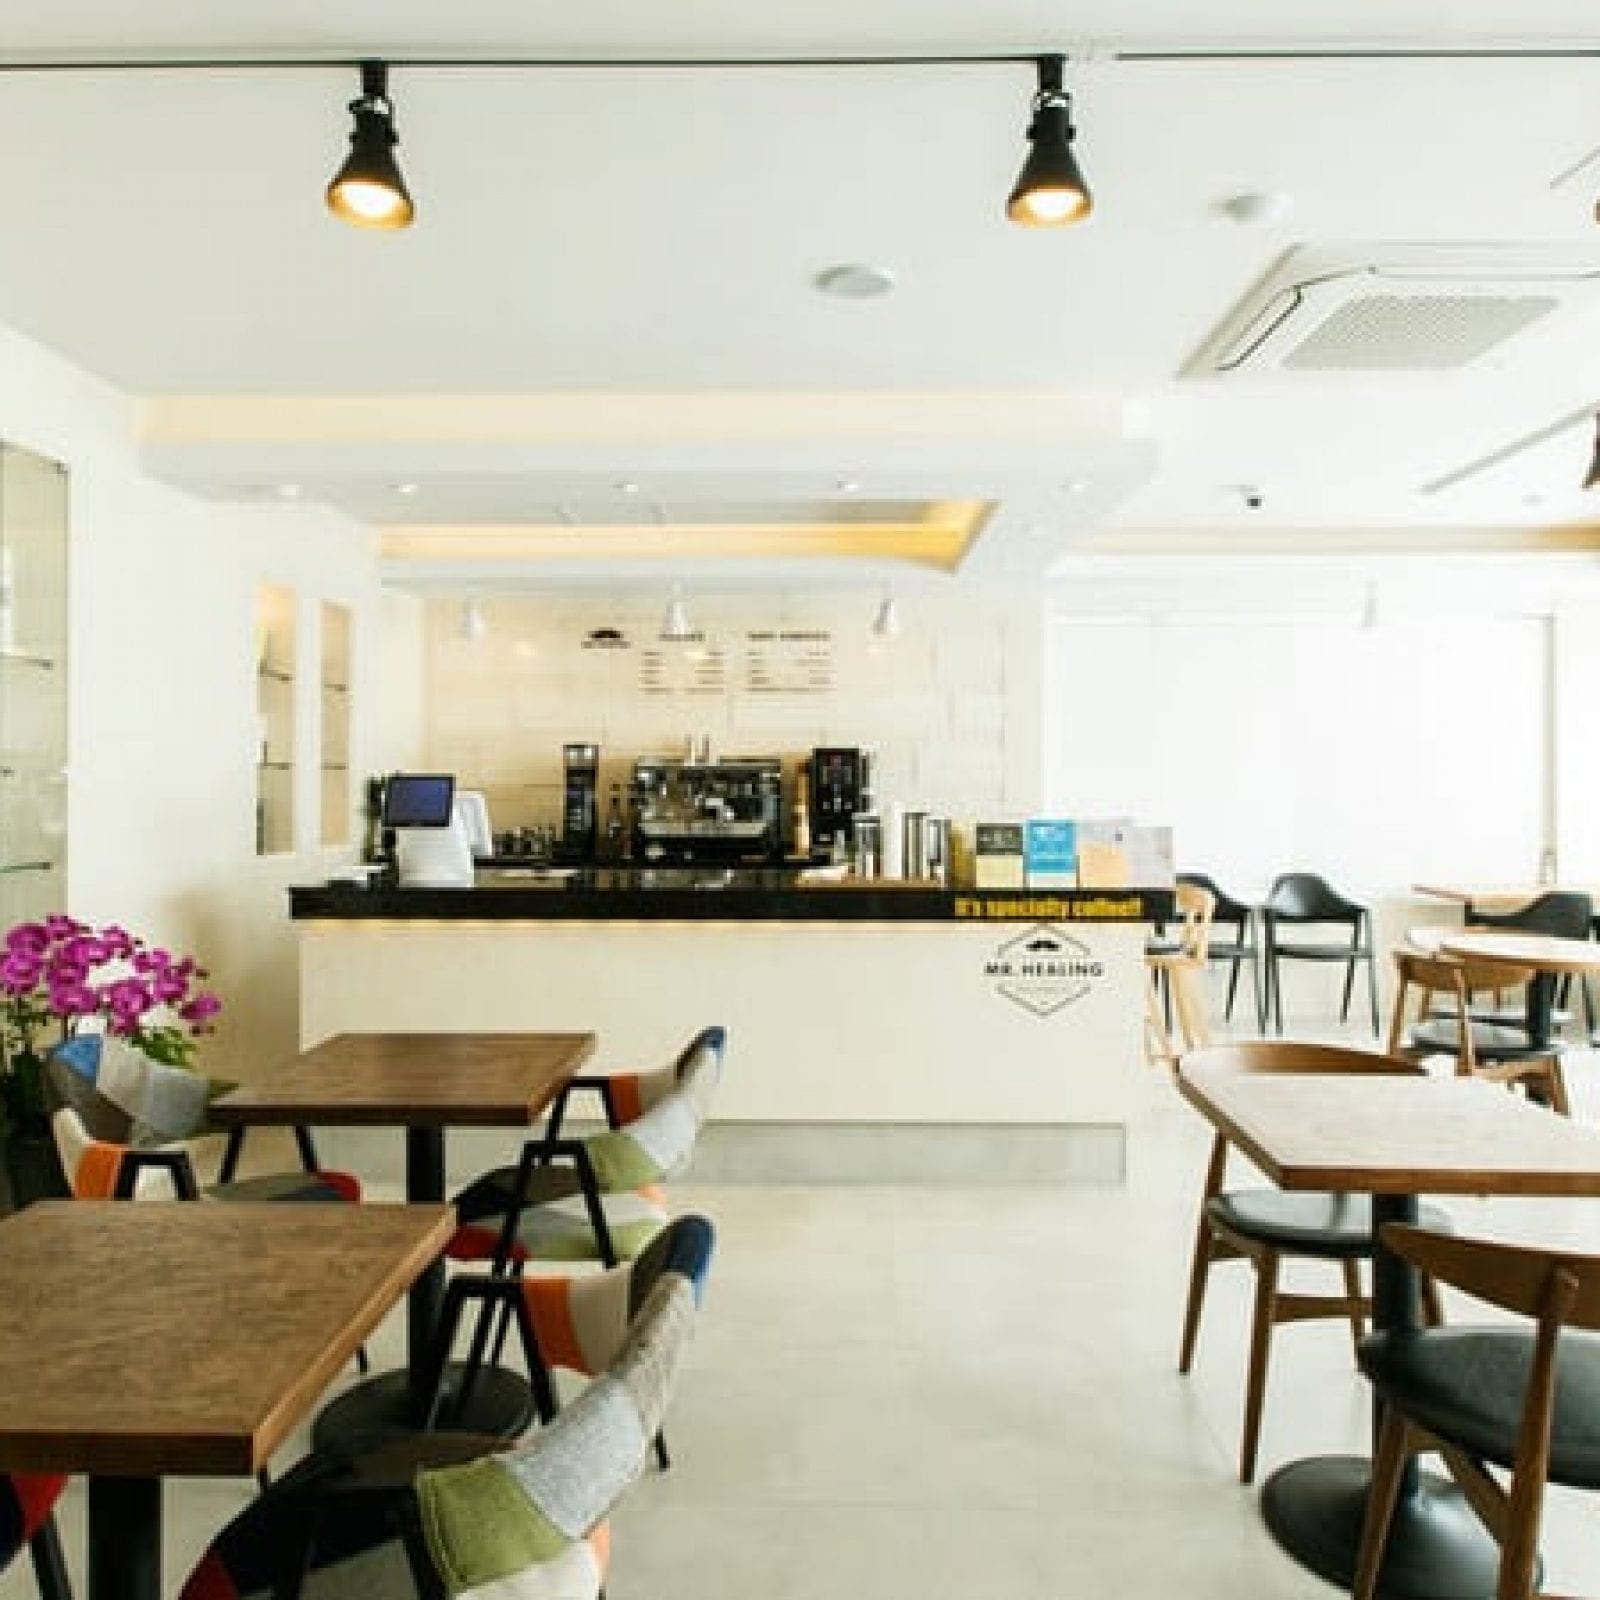 Mr Healing Cafe | South Korea